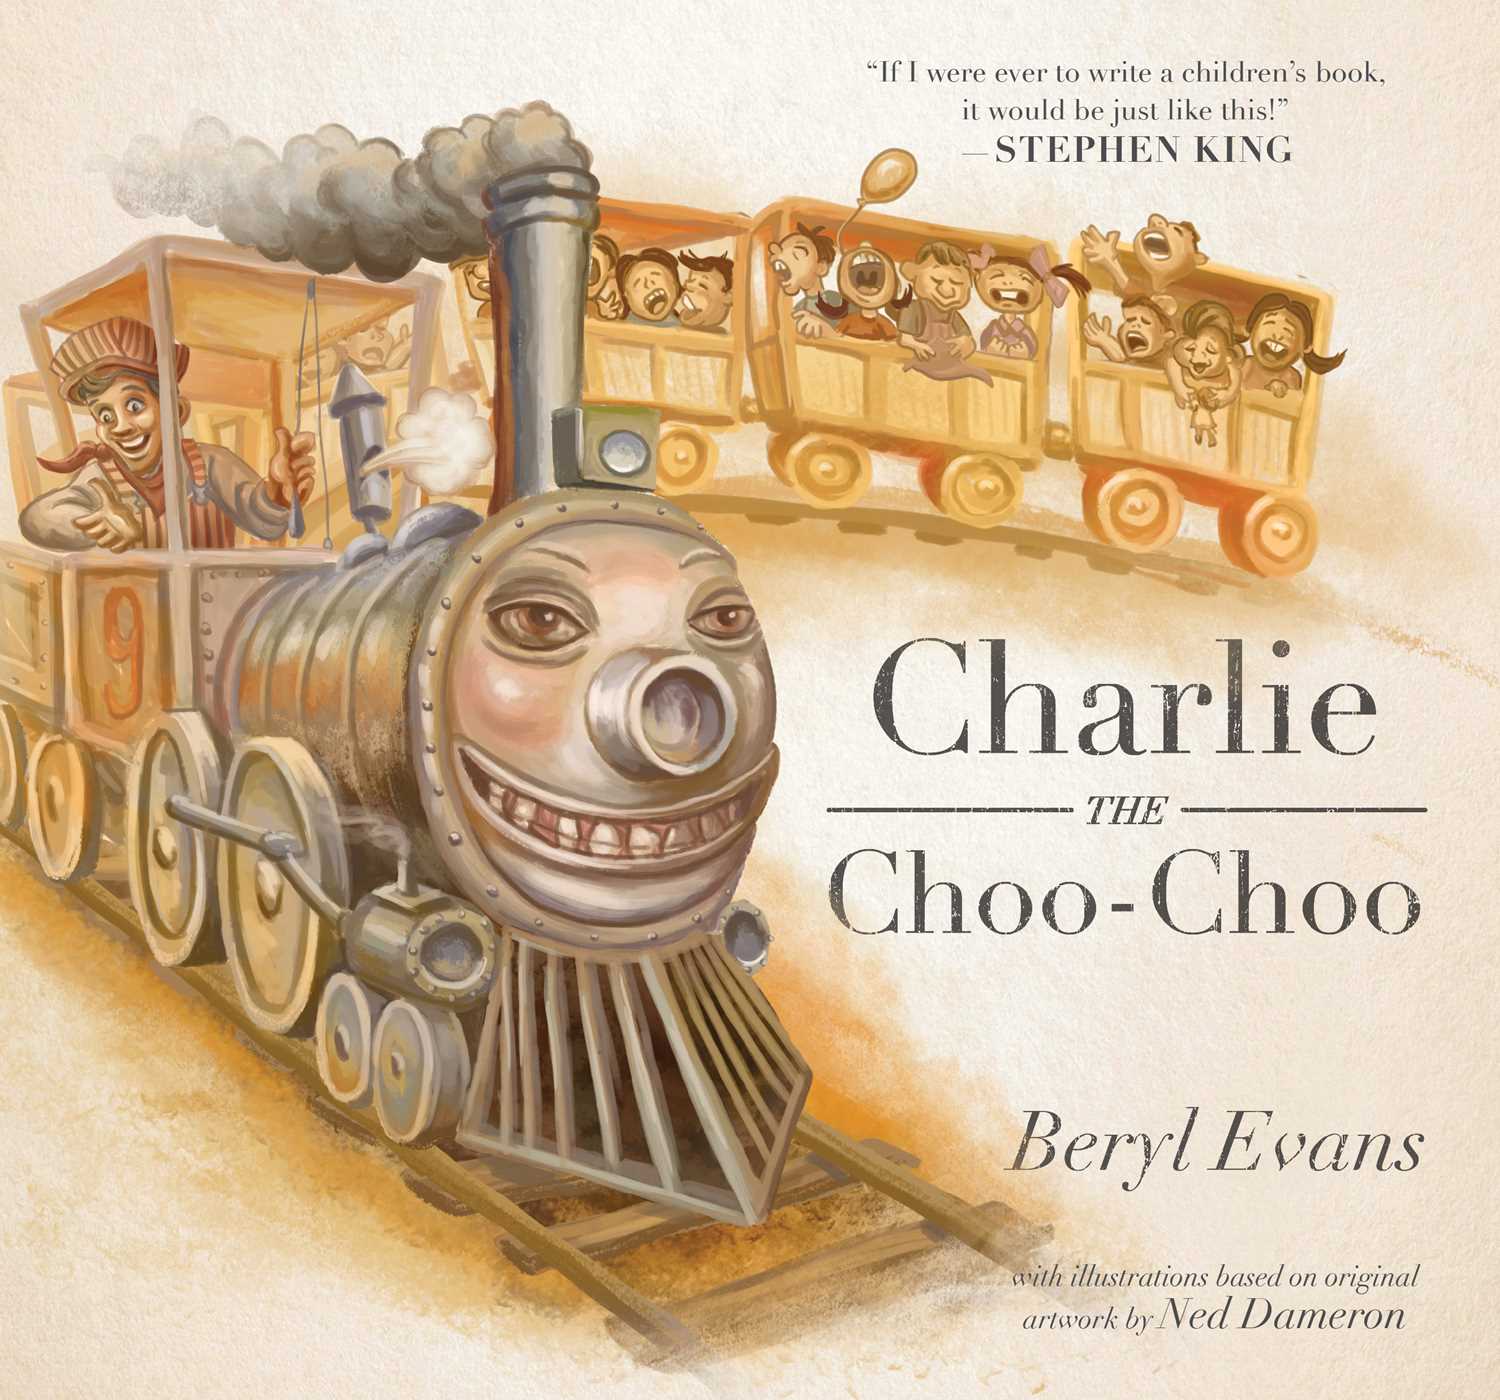 Photo of The Little Engine that Stirred Up Debate: "Charlie the Choo-Choo"